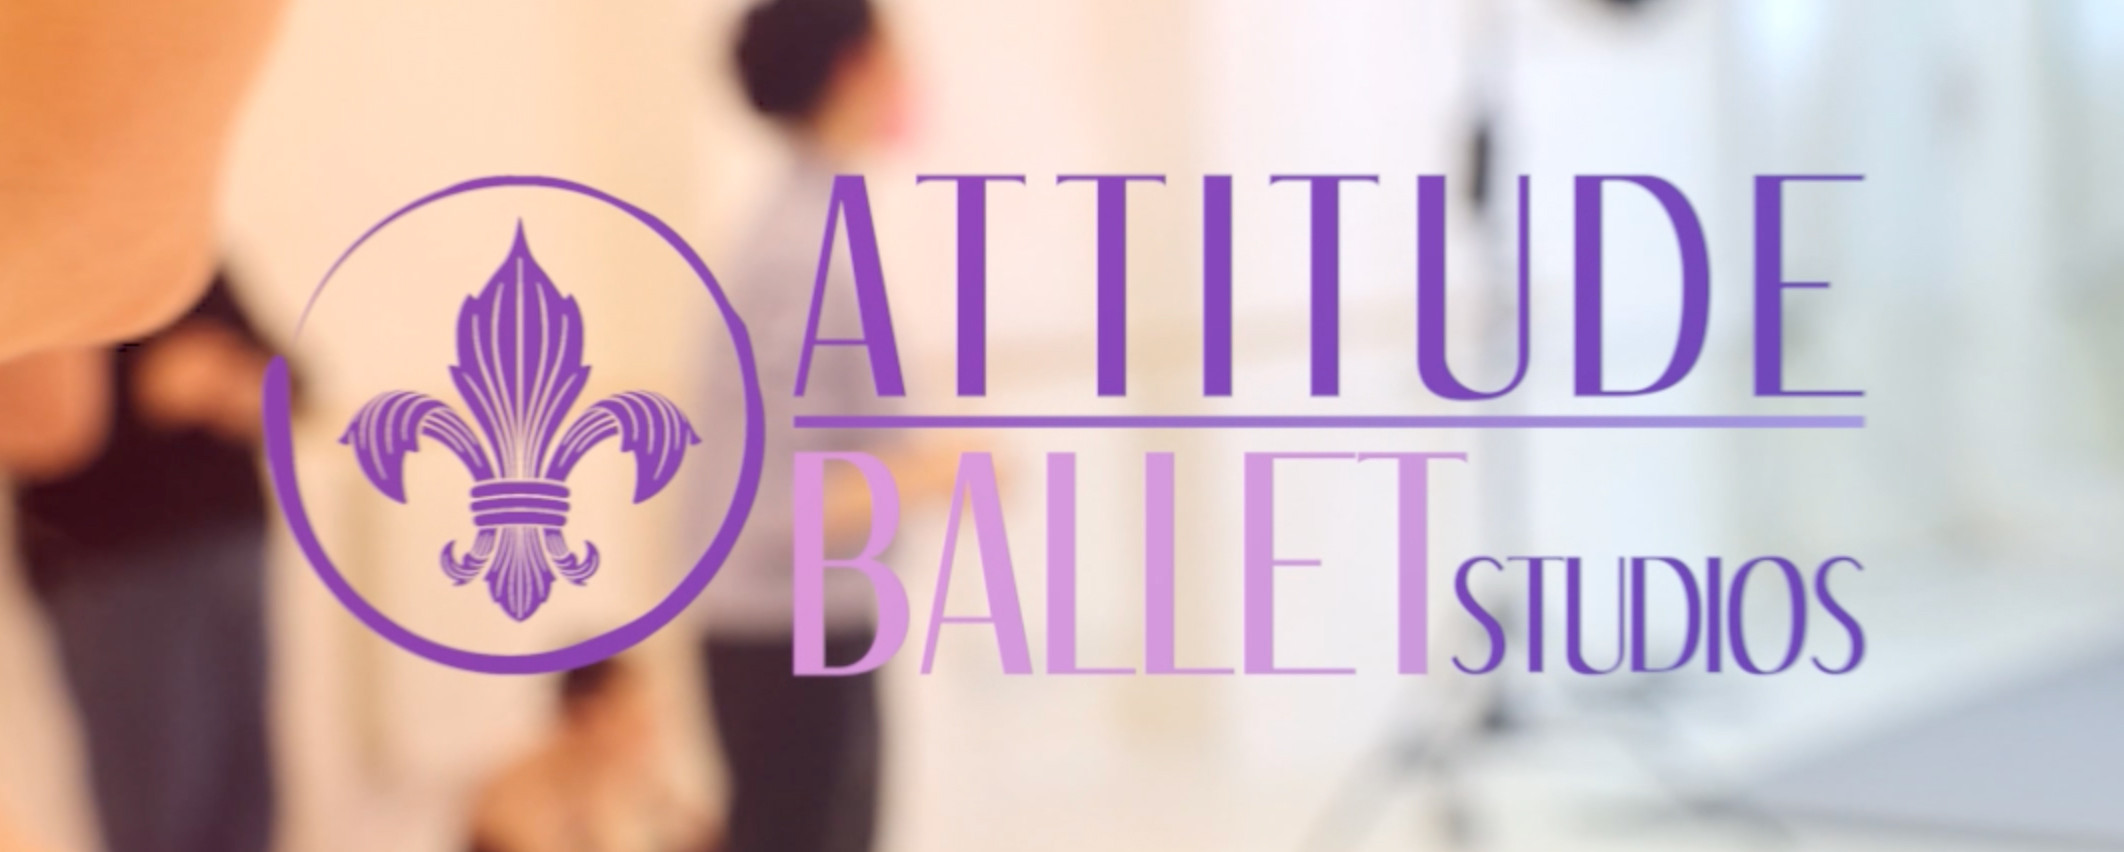 Making of - Spring Photo Session for Attitude Ballet Studios - Vienna